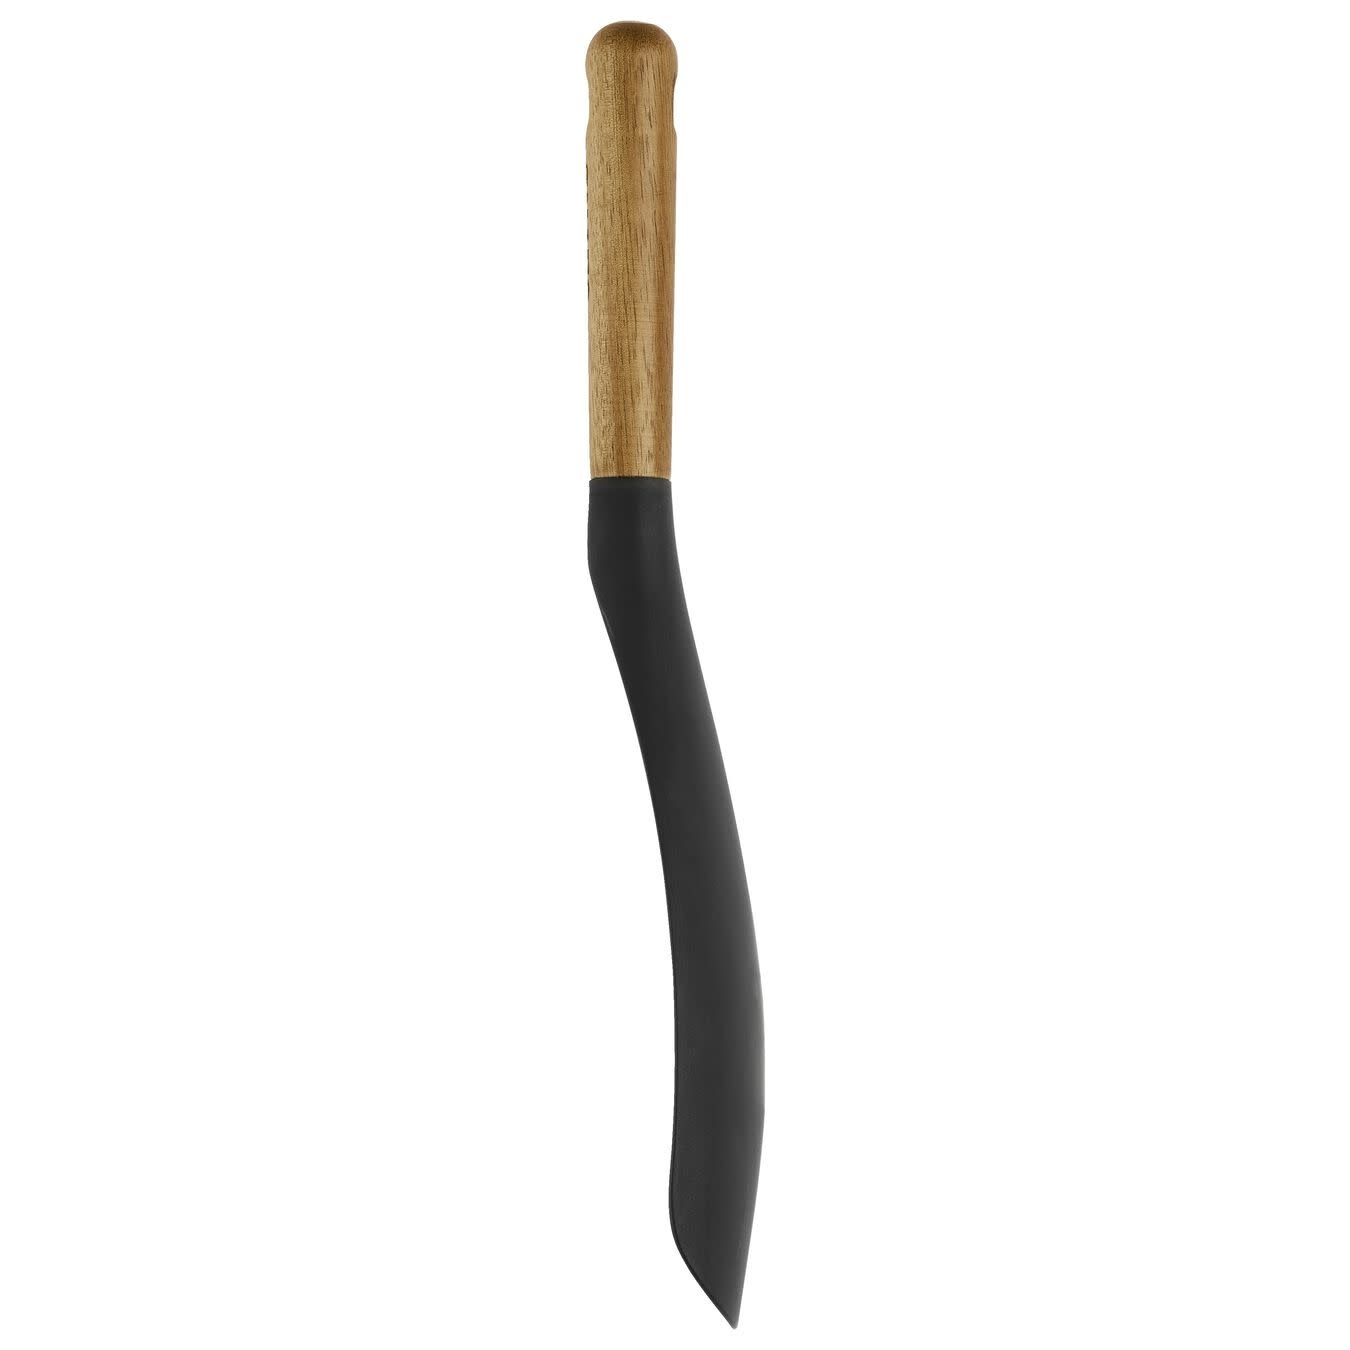 Staub universal spatula, 30 cm